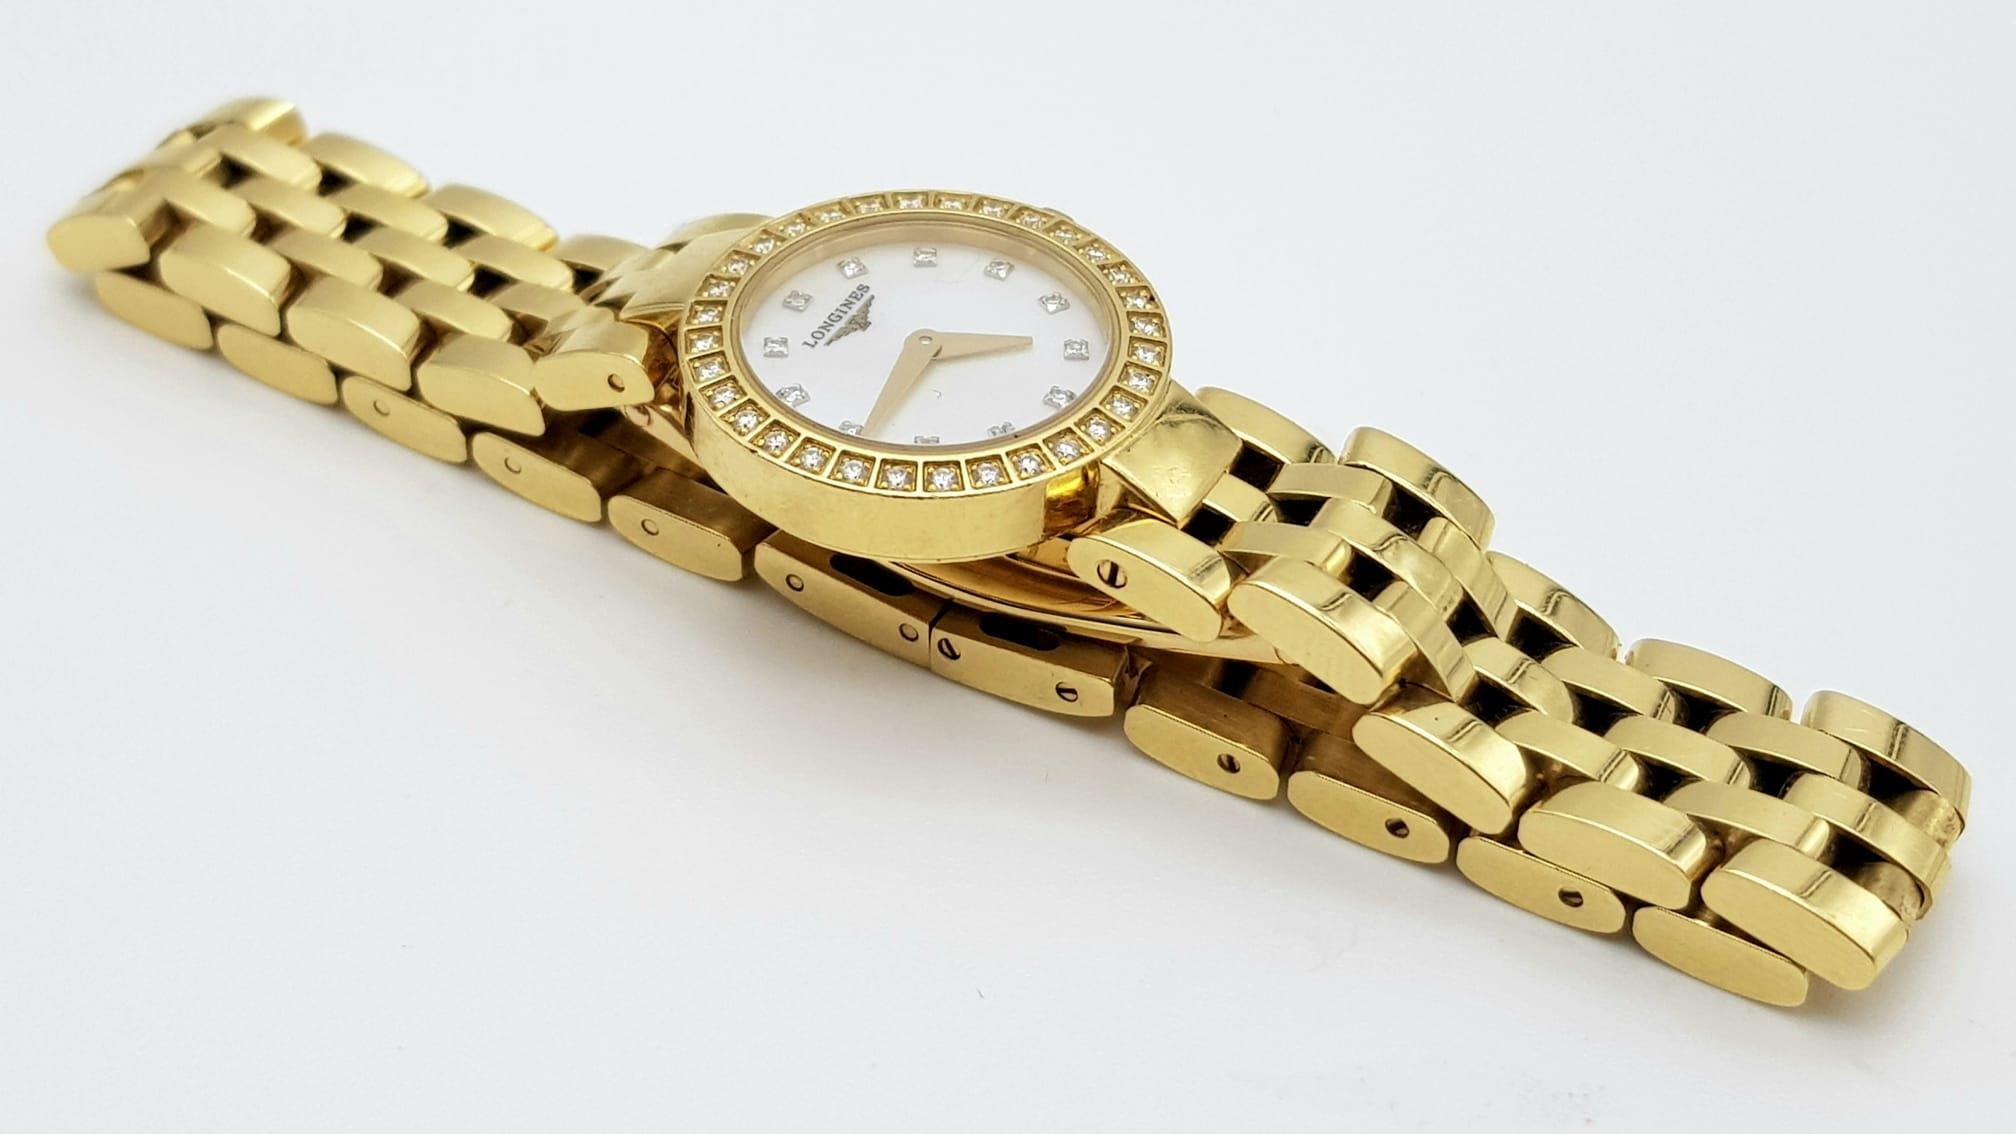 Longine ladies watch 18k diamond watch in original box and certificate. 54.3 grams. 19mm. - Image 6 of 7